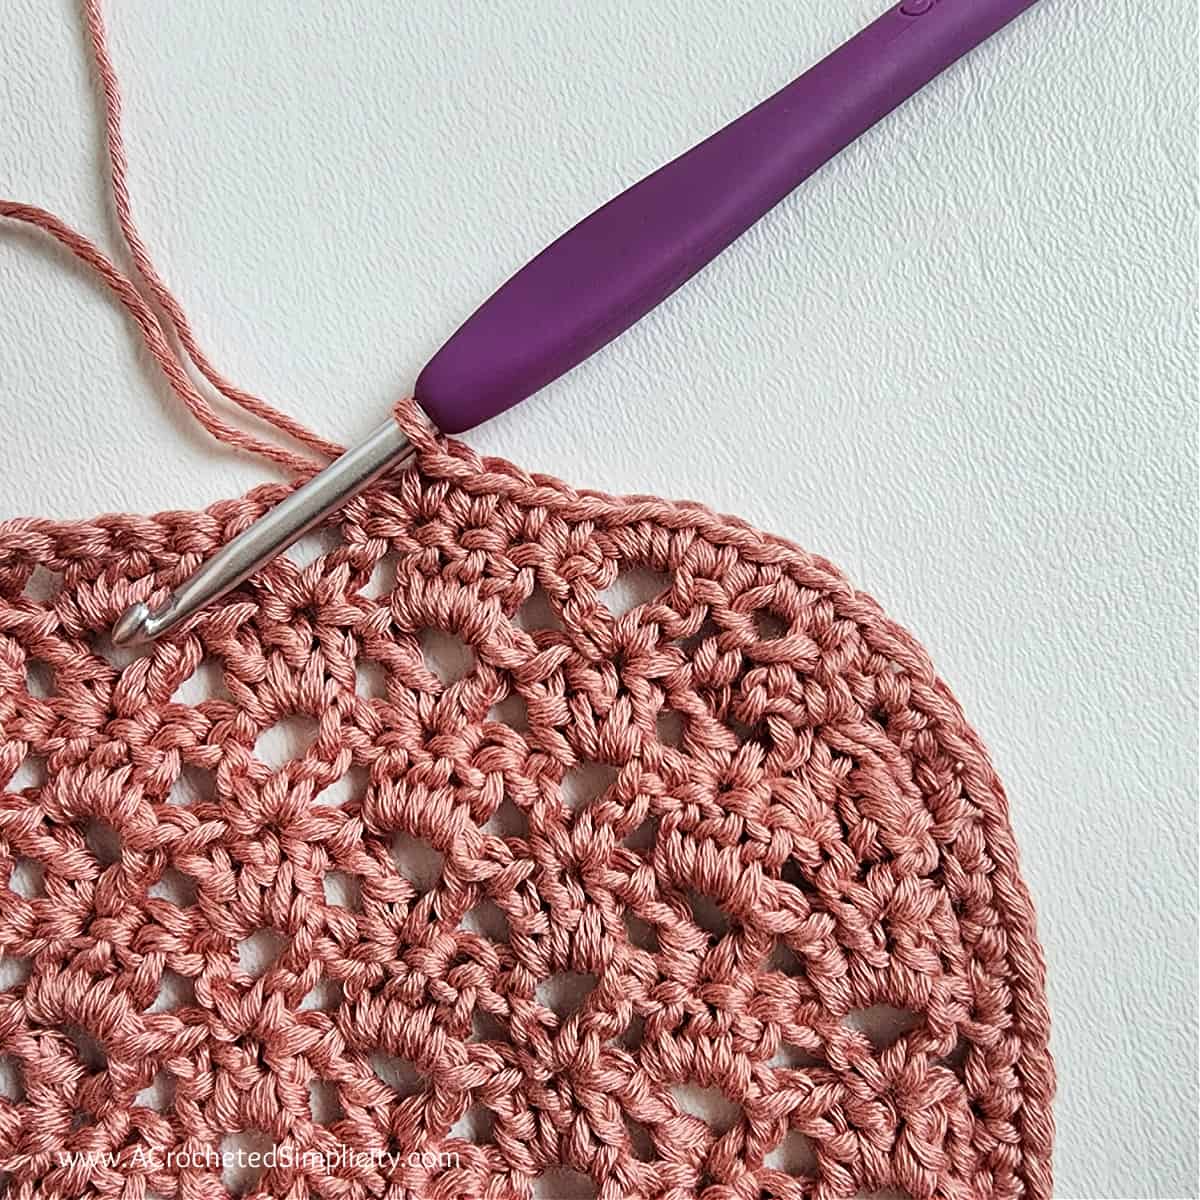 Close up of a purple crochet hook edging the cardigan pocket.